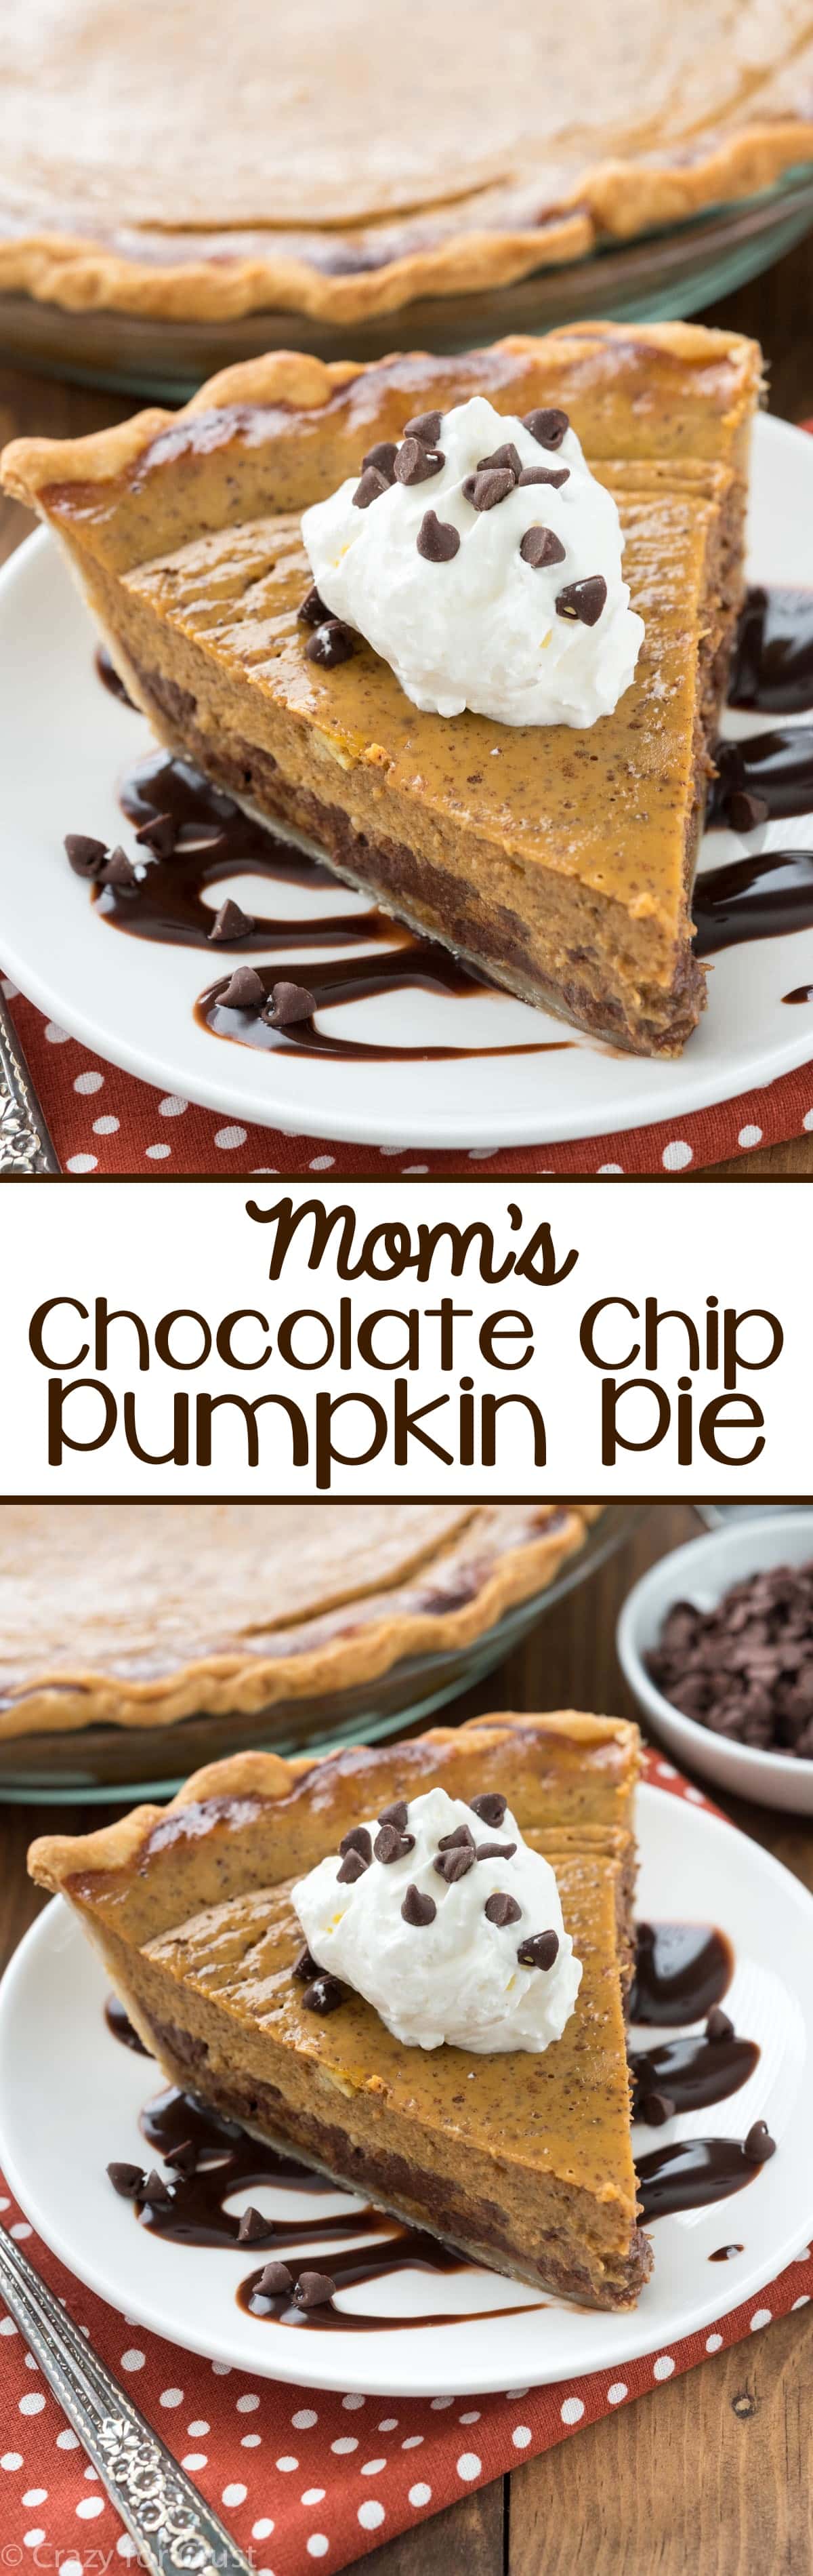 Mom's Chocolate Chip Pumpkin Pie - this easy pumpkin pie recipe is a family favorite! A traditional pumpkin pie that's filled with chocolate chips!